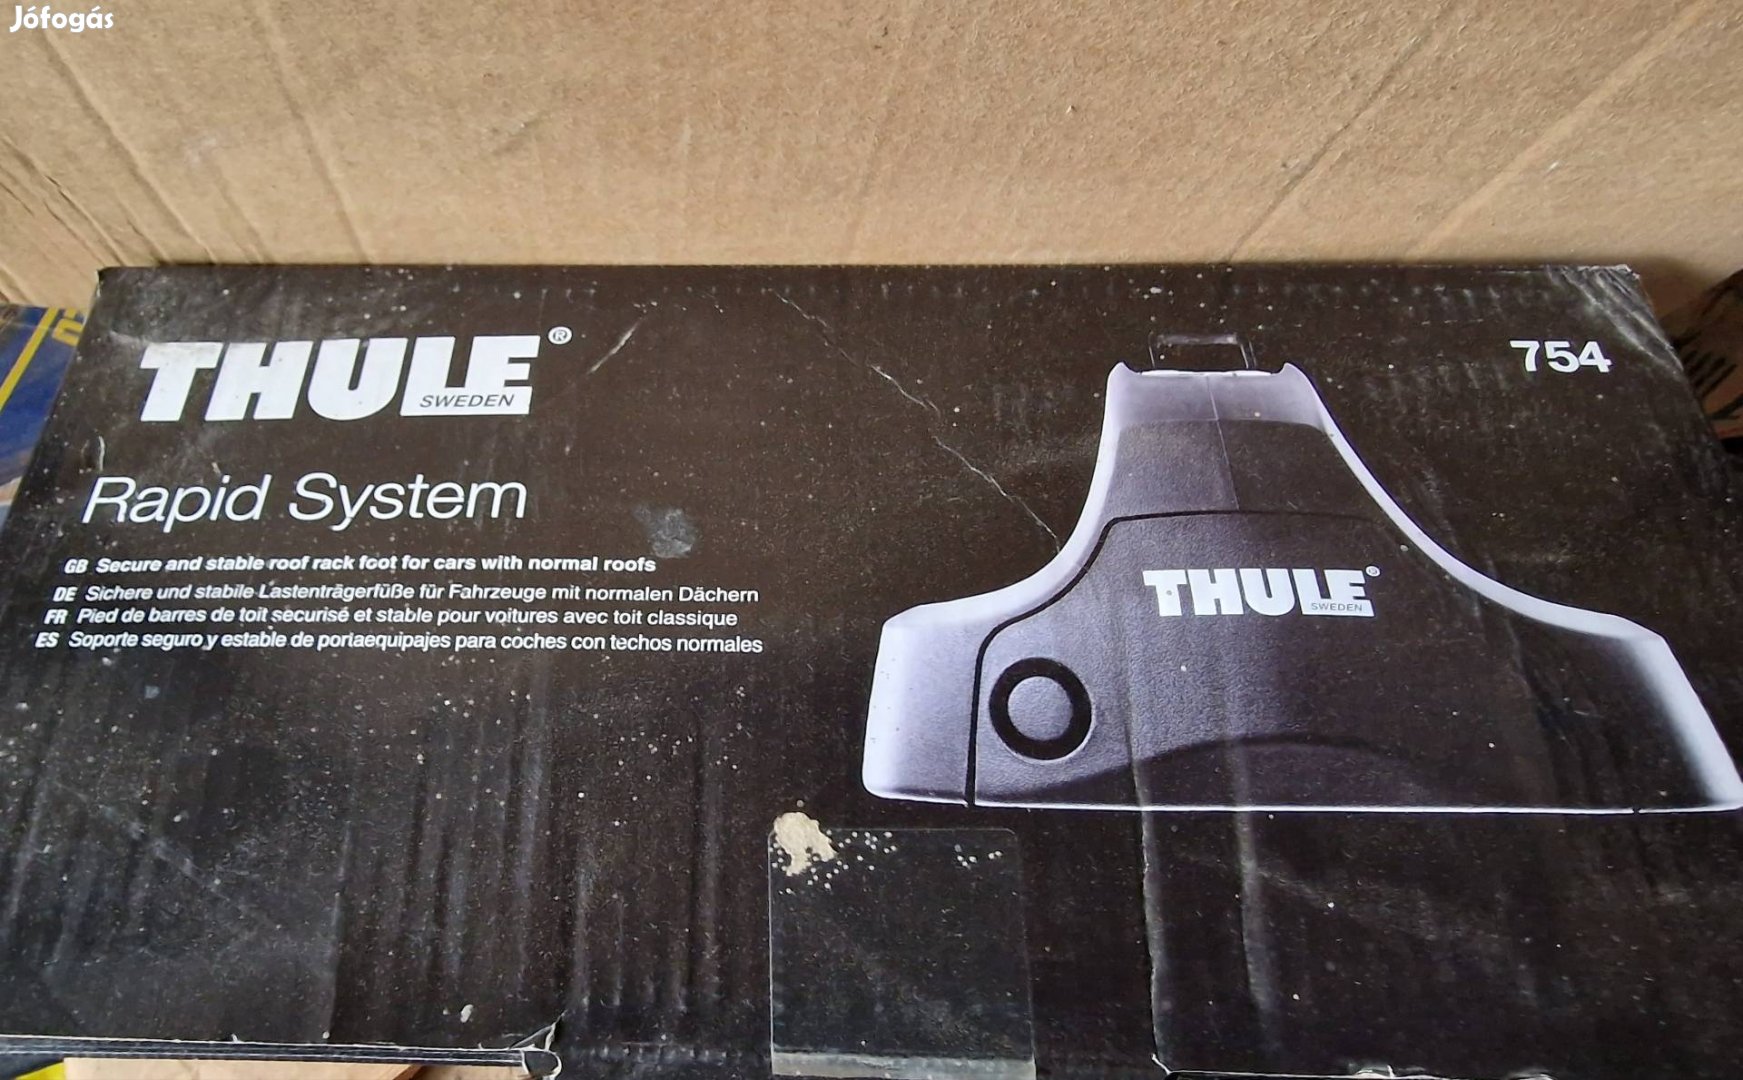 Thule 754 Rapid System talpszett